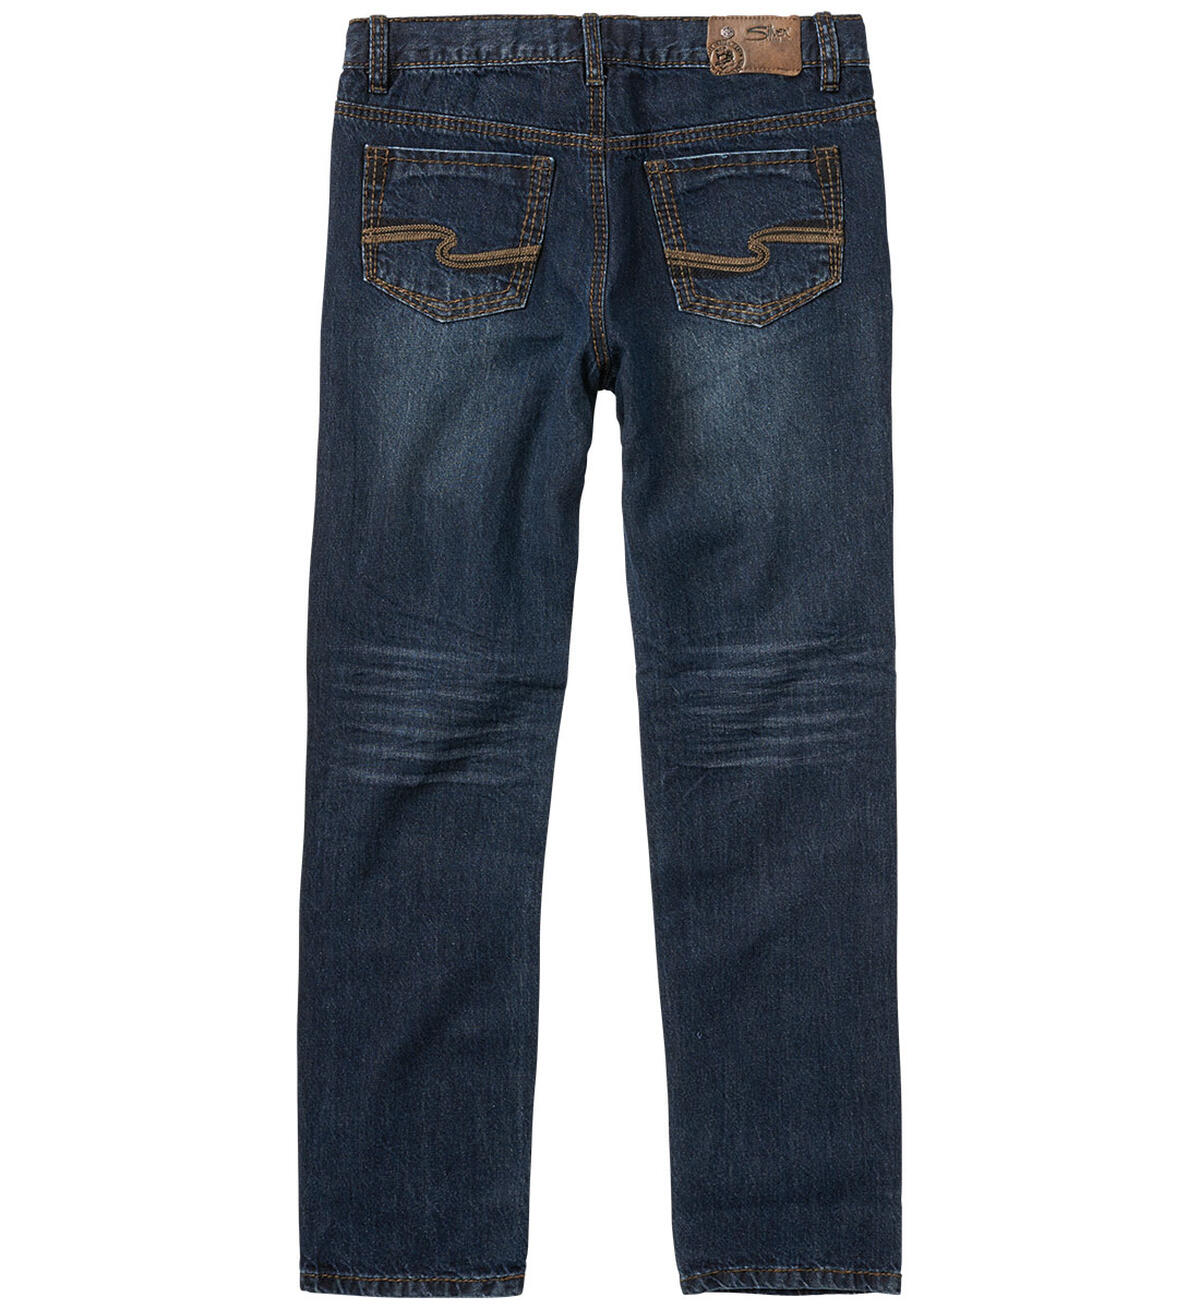 Nathan Skinny Jeans in Dark Wash (4-7), , hi-res image number 1